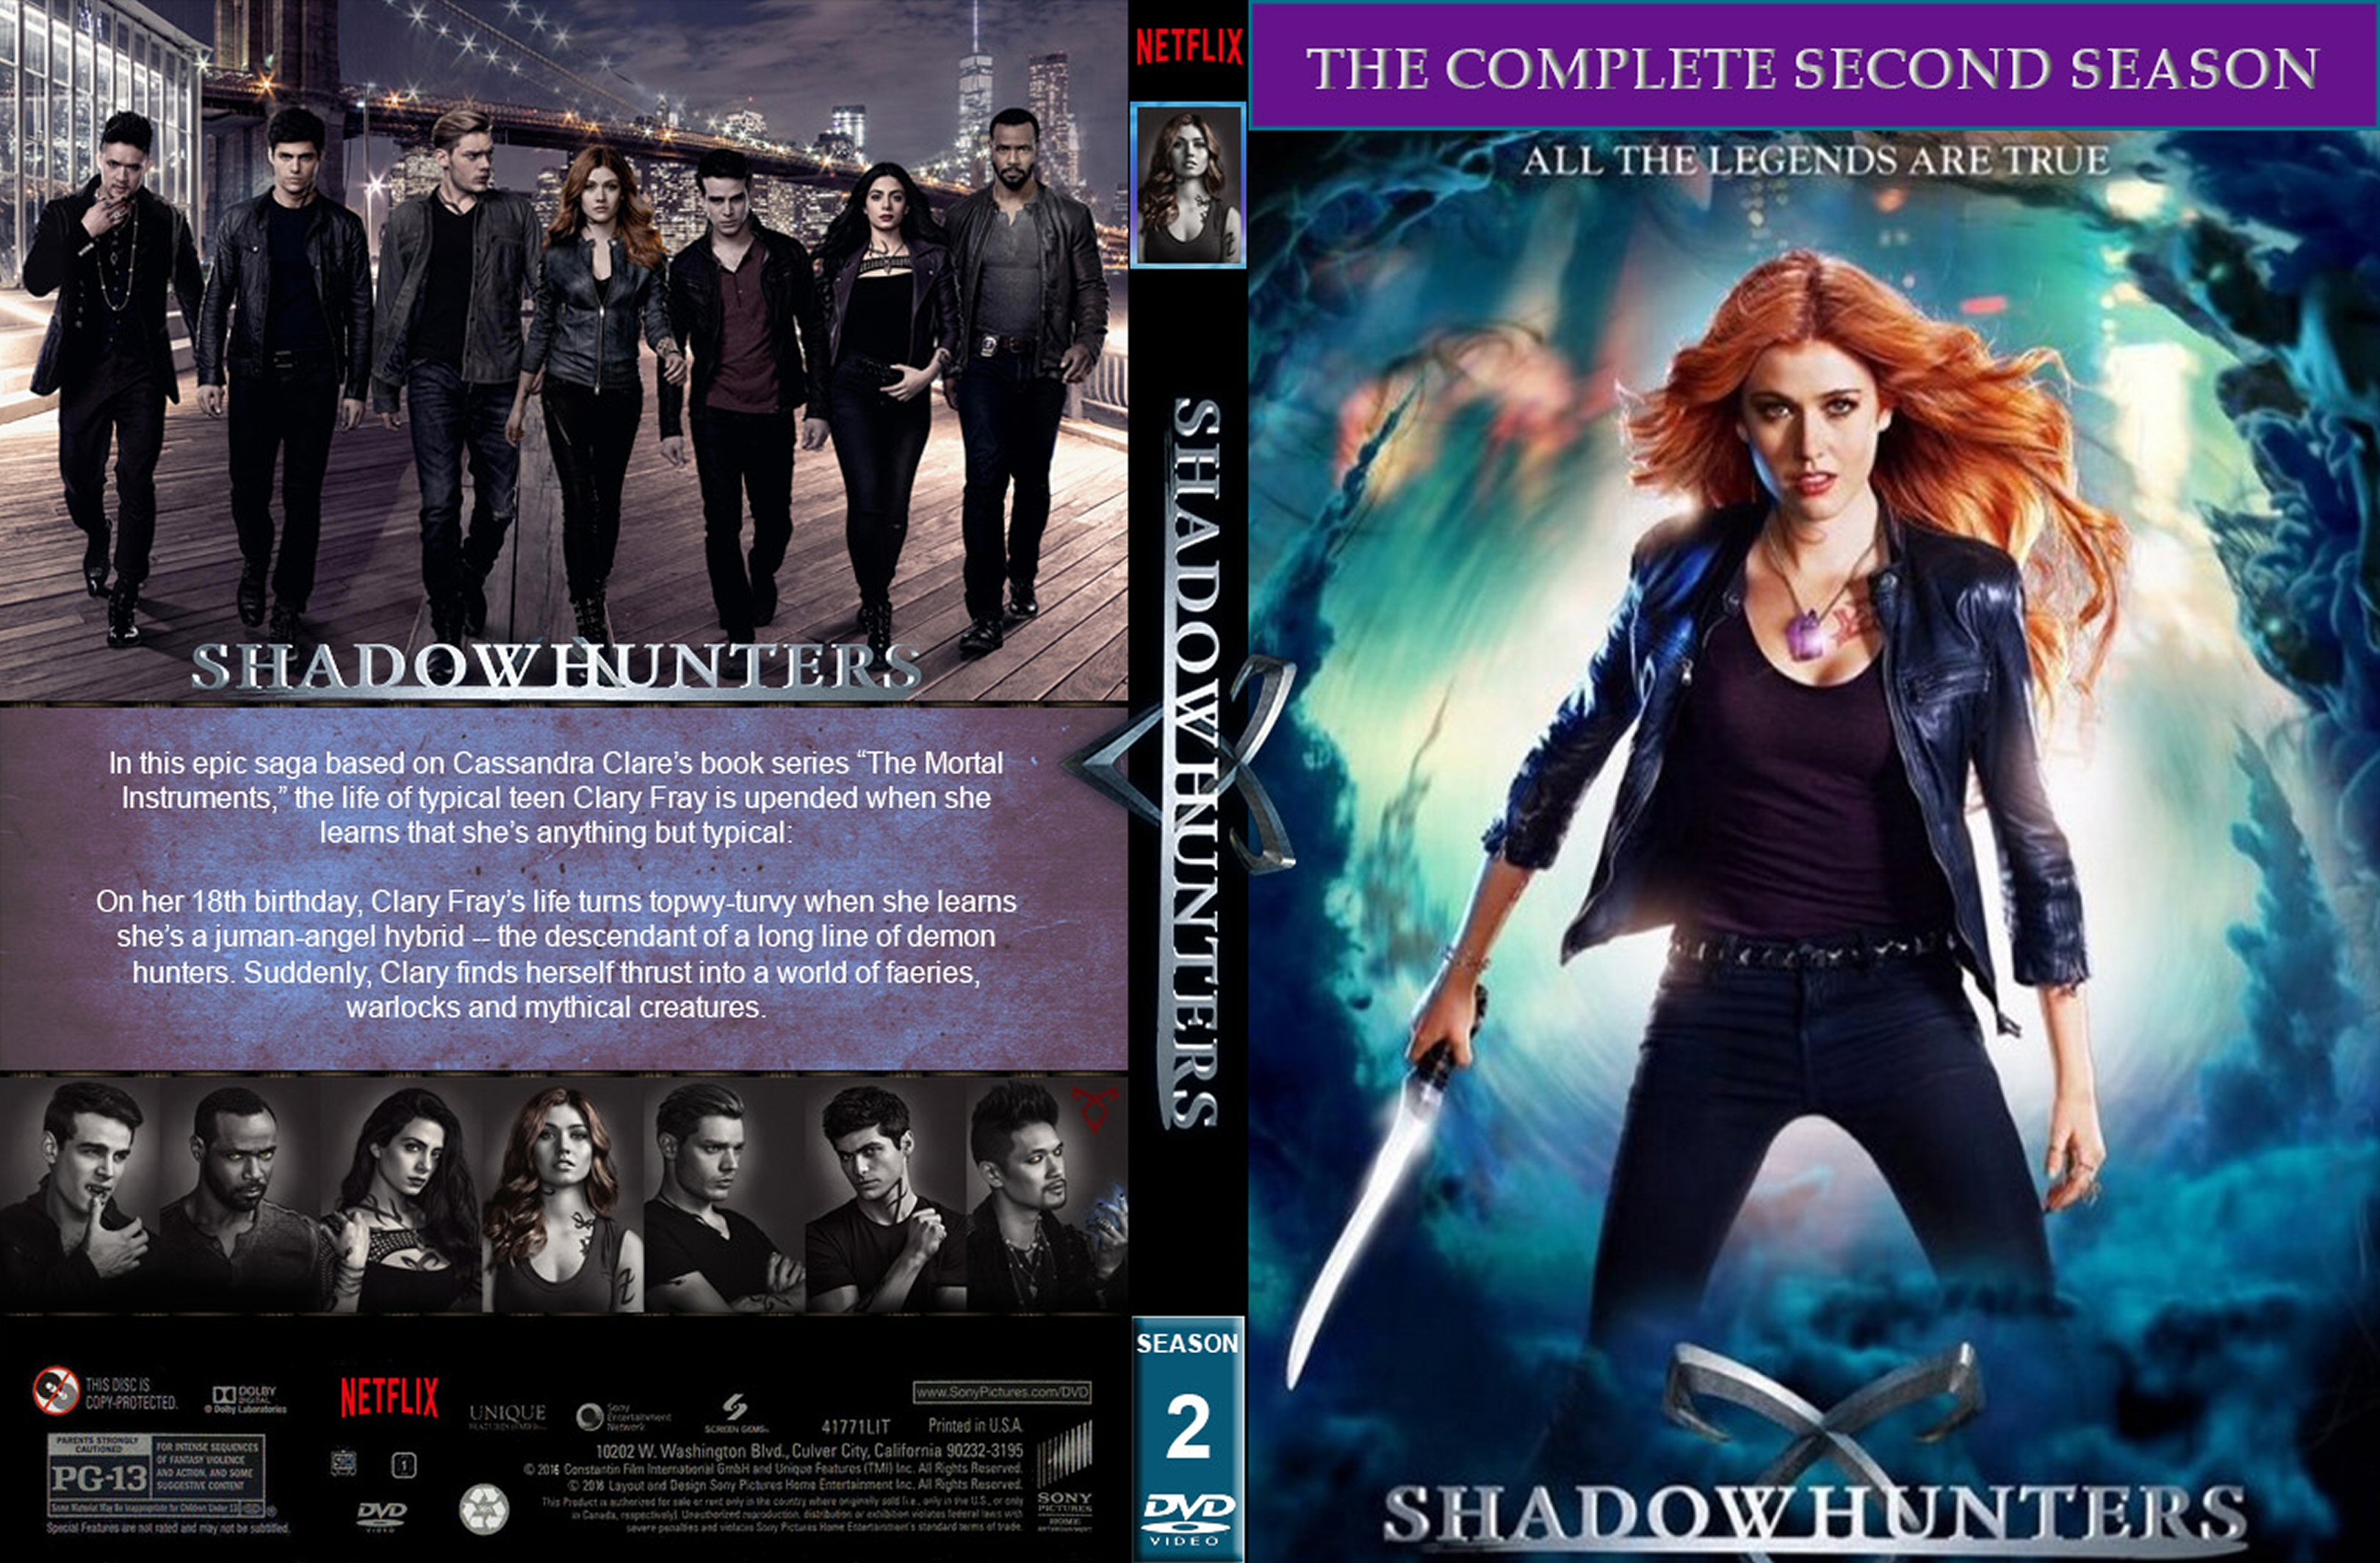 Shadowhunters season 1 dvd release date uk